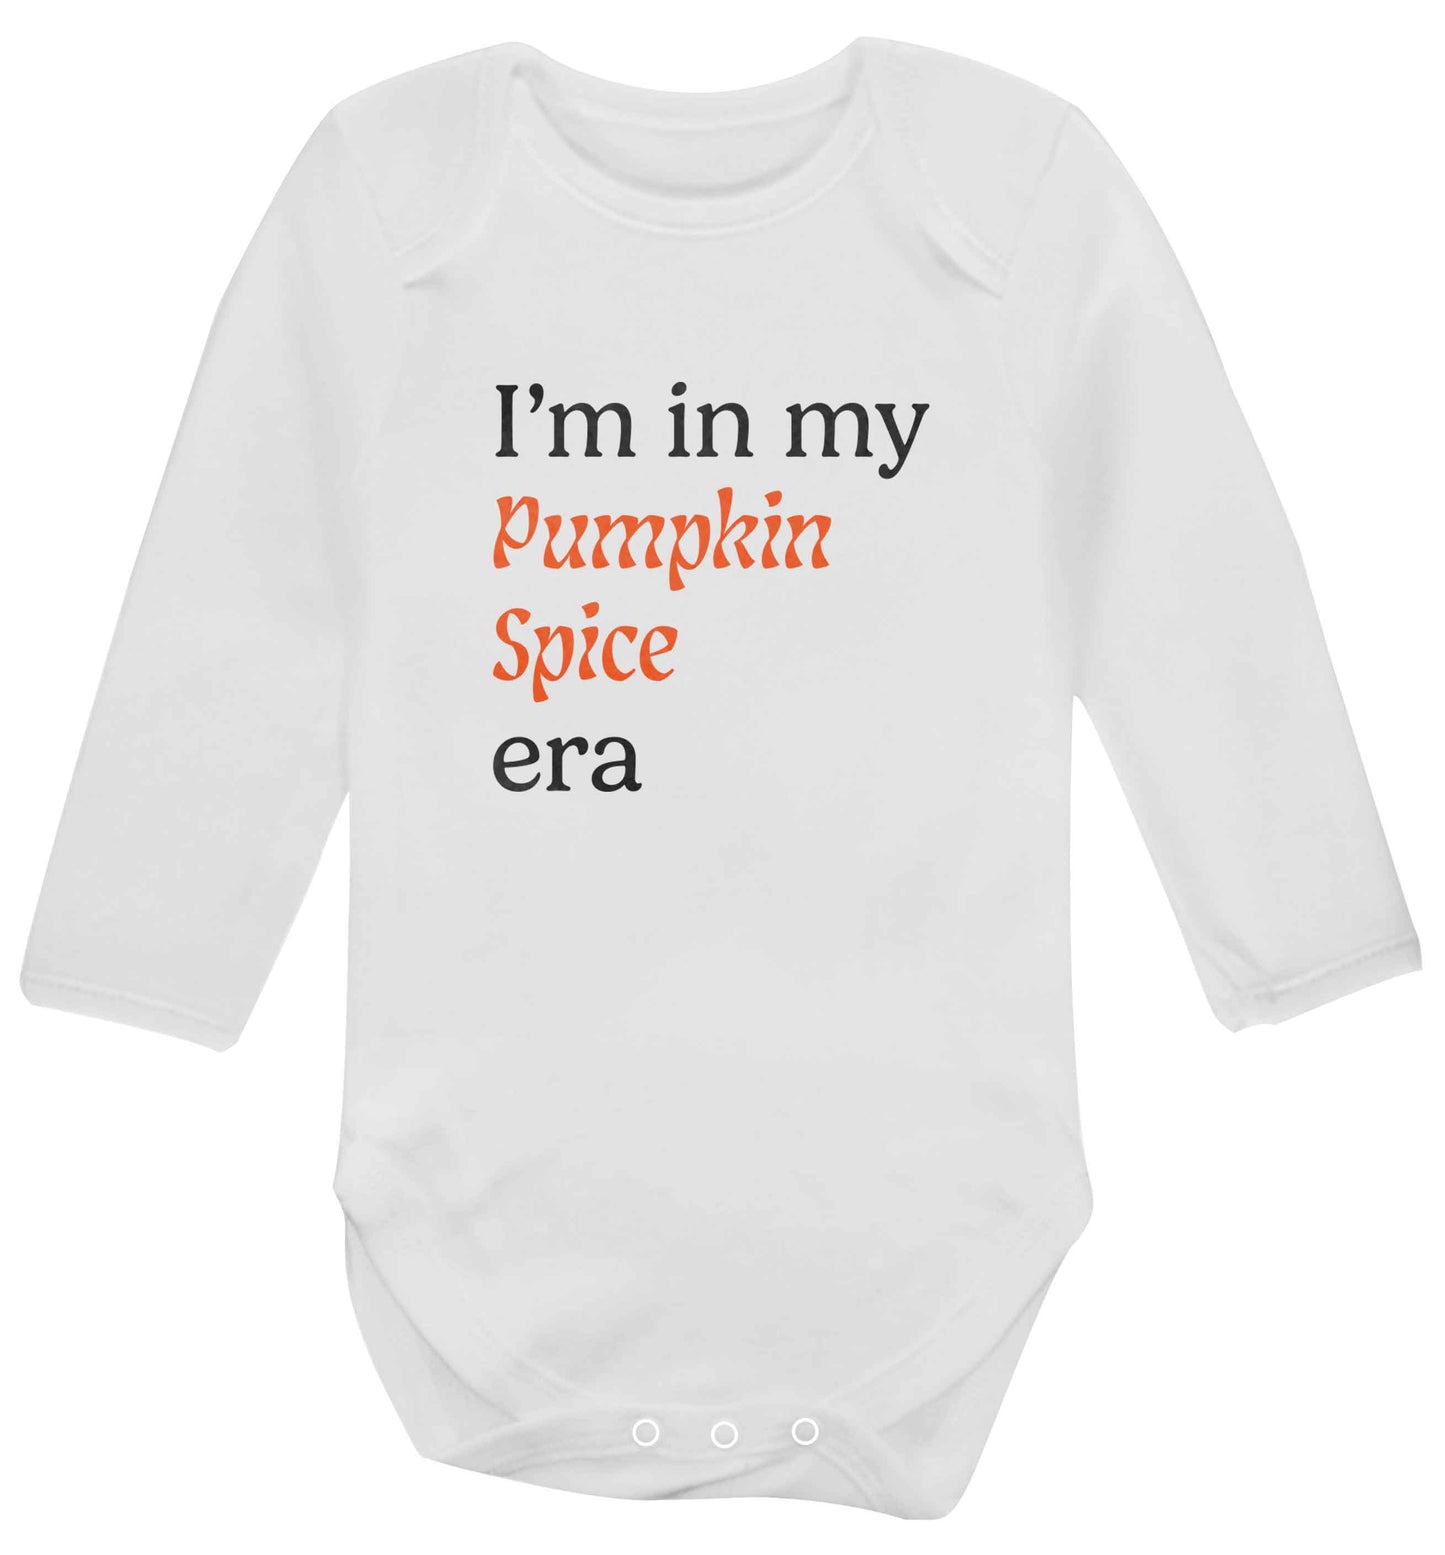 I'm in my pumpkin spice era Kit baby vest long sleeved white 6-12 months